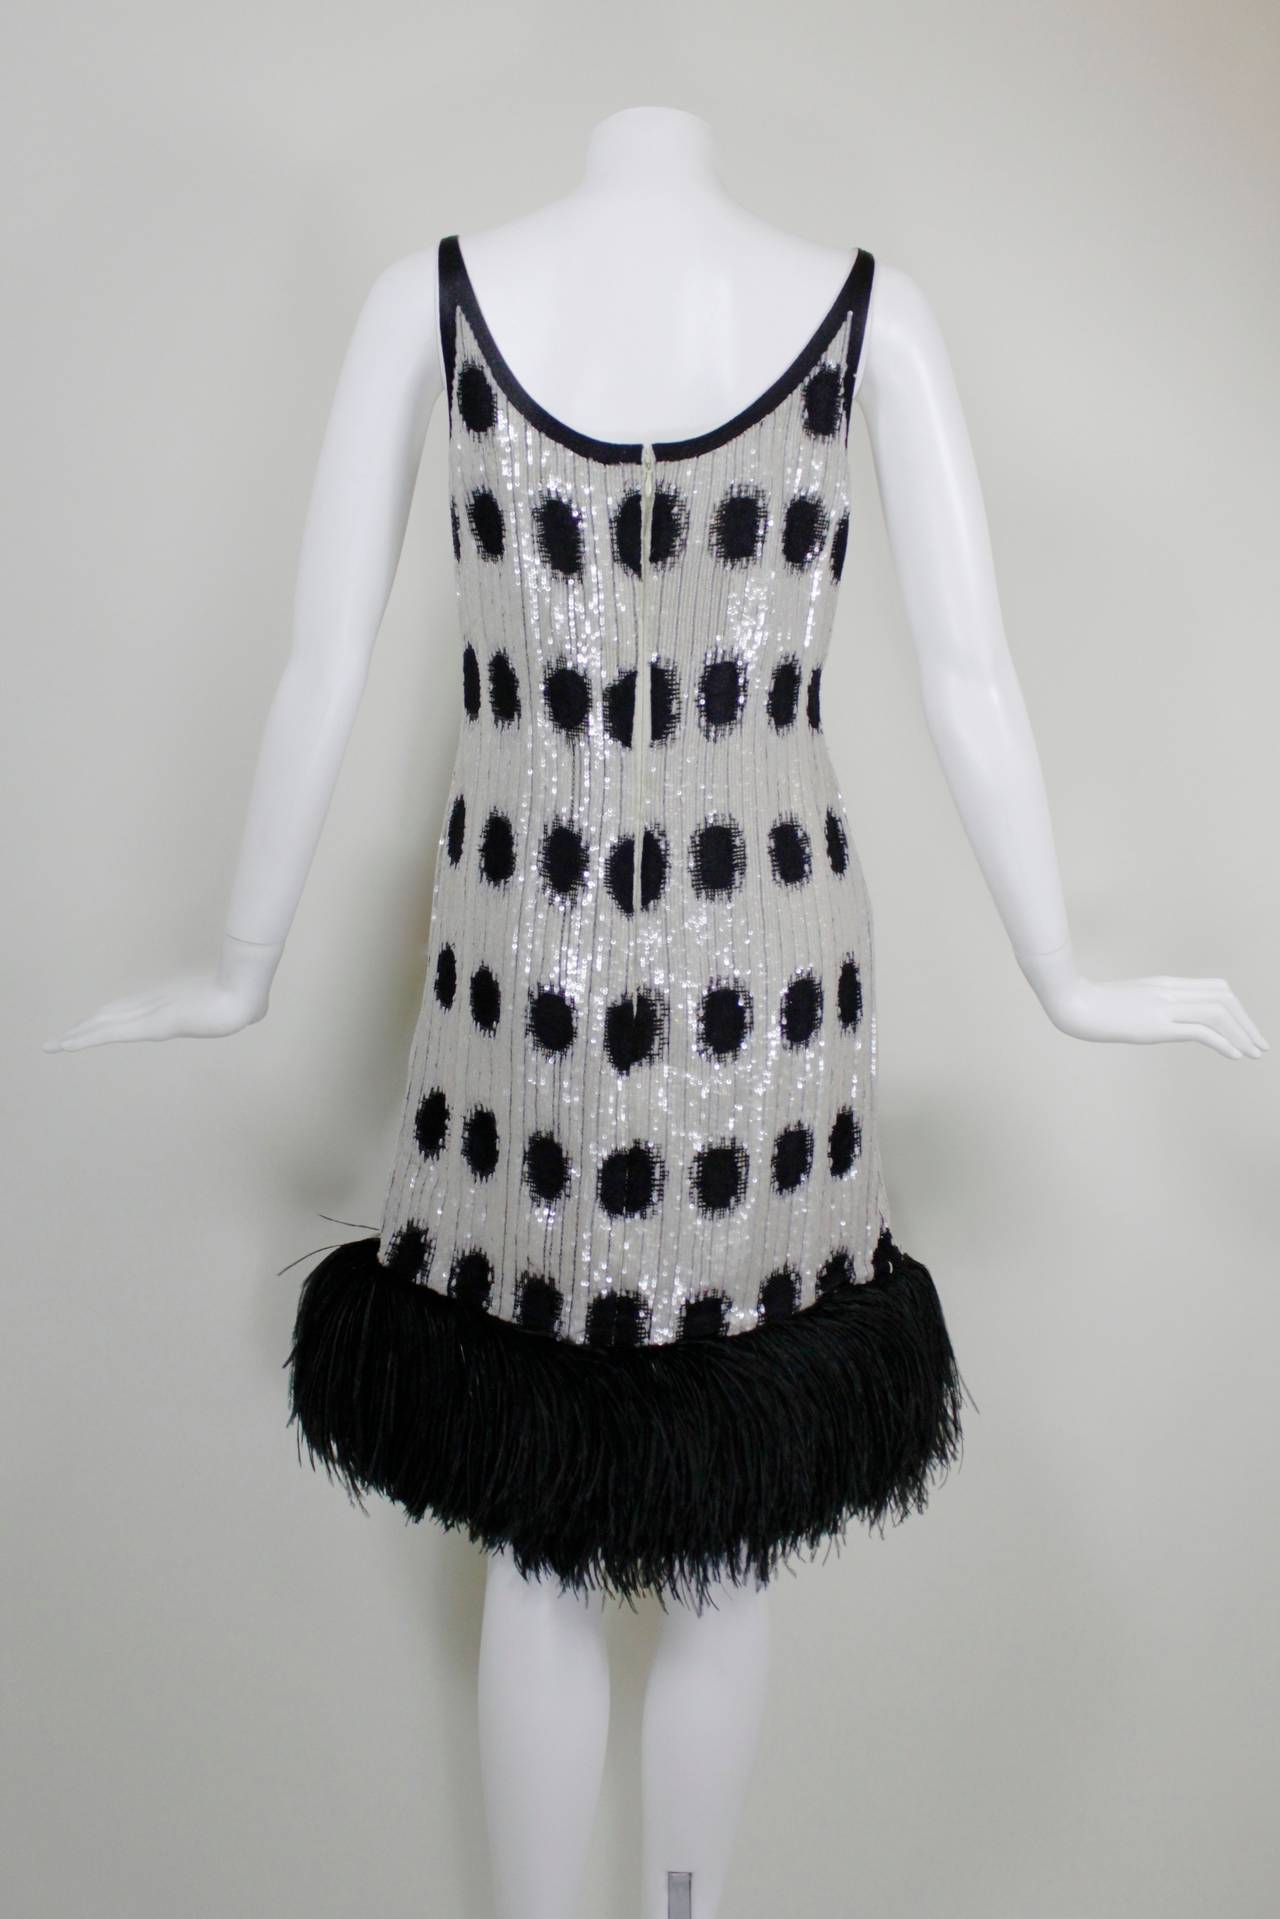 Women's 1980s Bill Blass Sequined Polka Dot Party Dress with Ostrich Trim